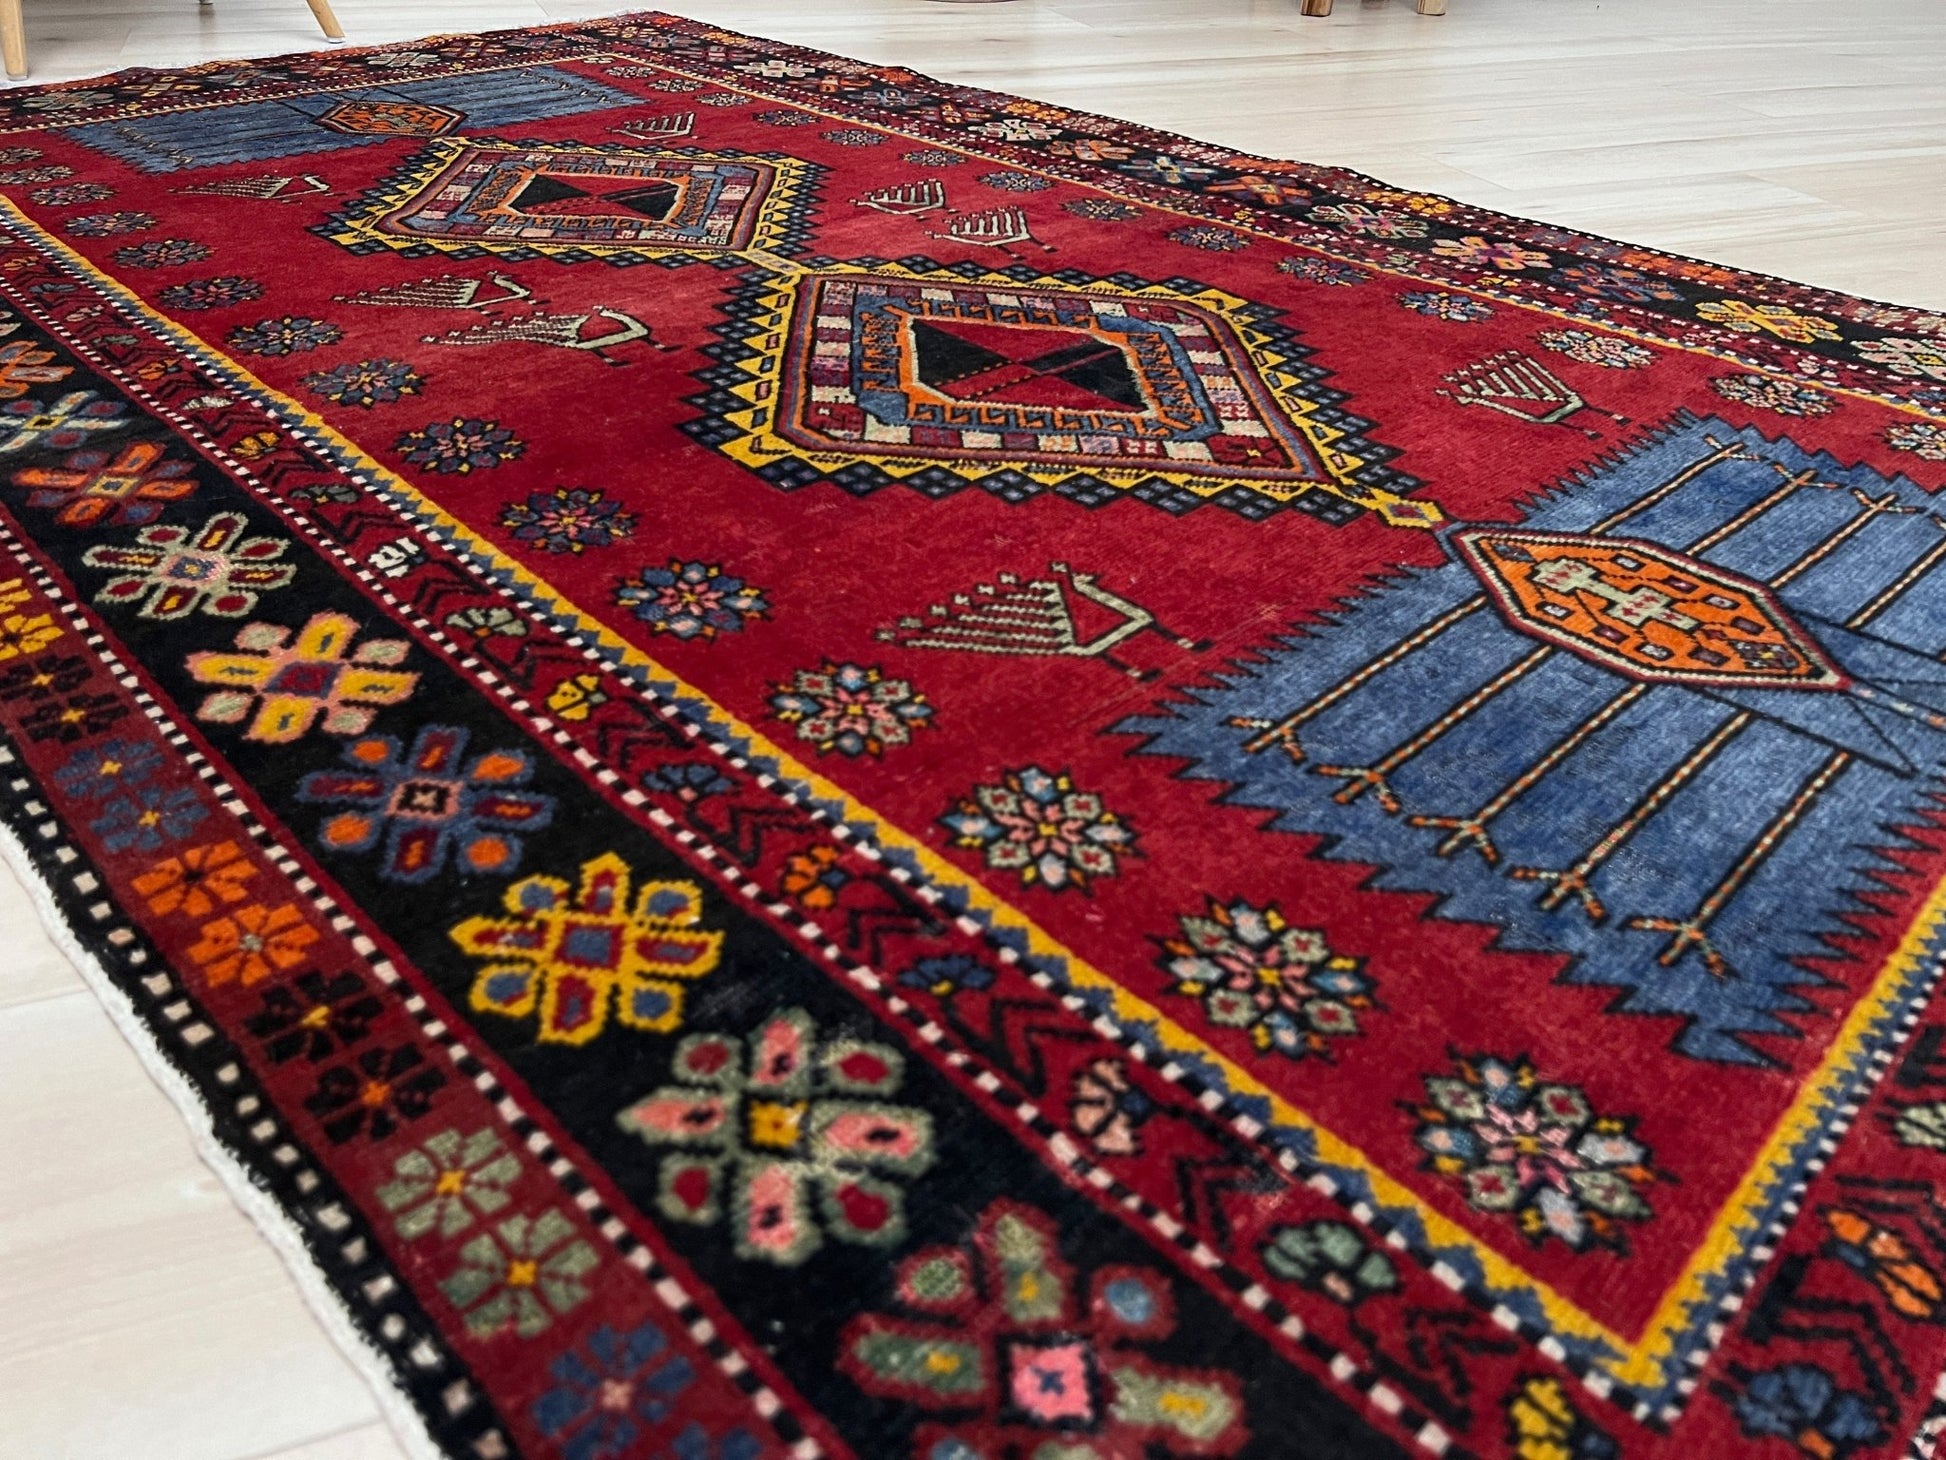 Armenian peacock caucasian rug. Handmade scatter small rug shop san francisco bay area. Buy wool antique rug online